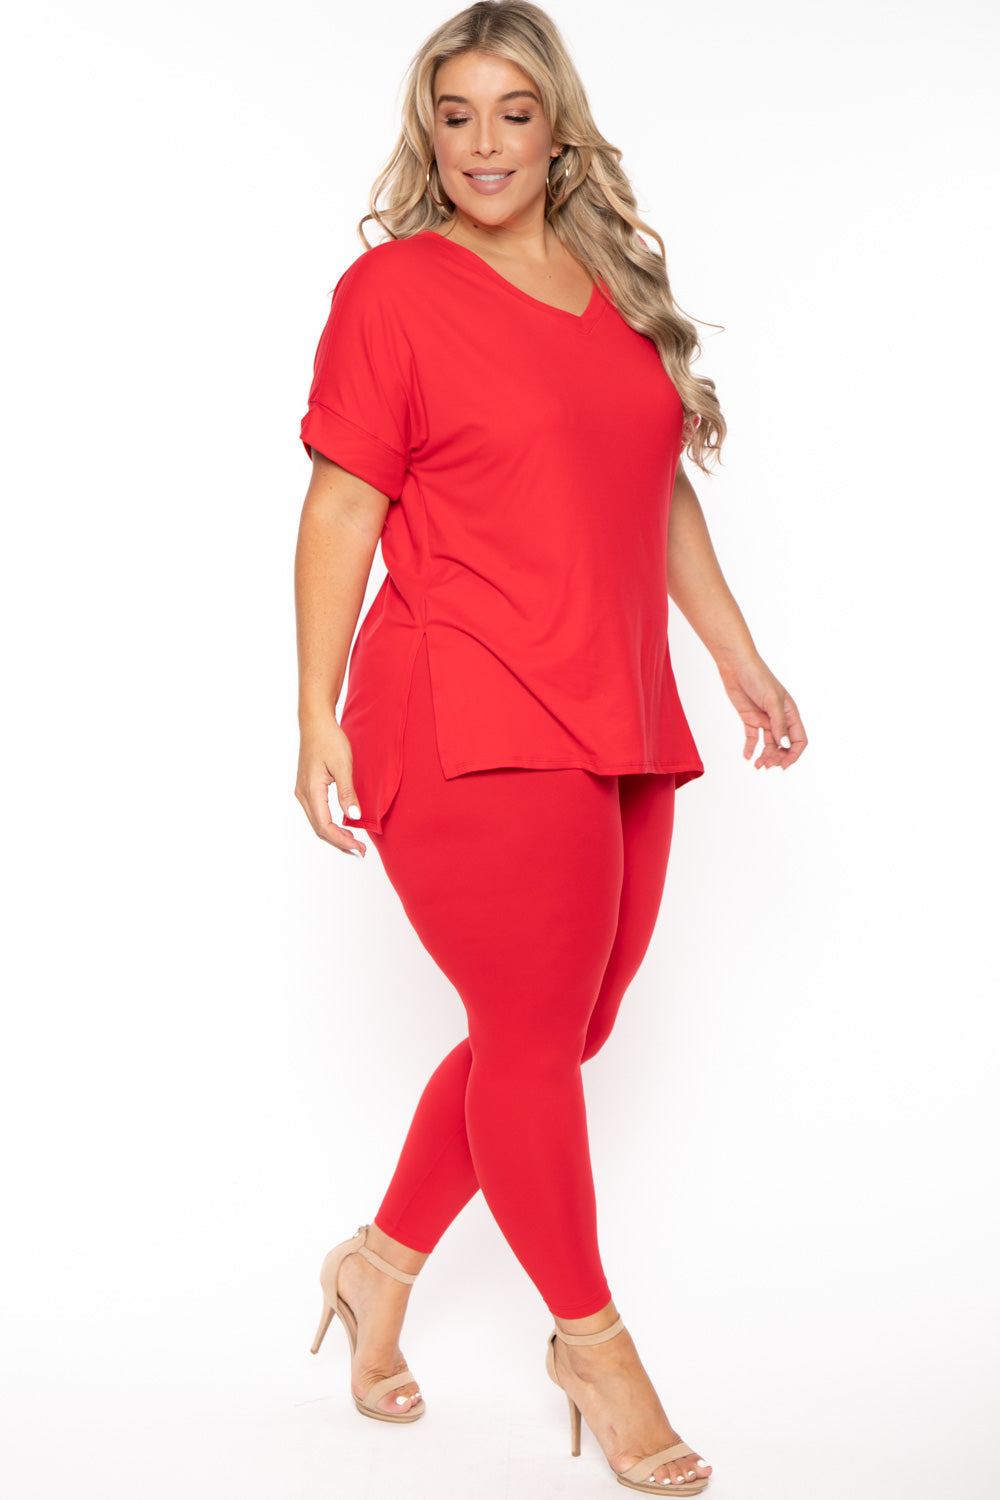 ZENANA Matching Sets Plus Size Lexa Tee And Legging Pant Set - Red